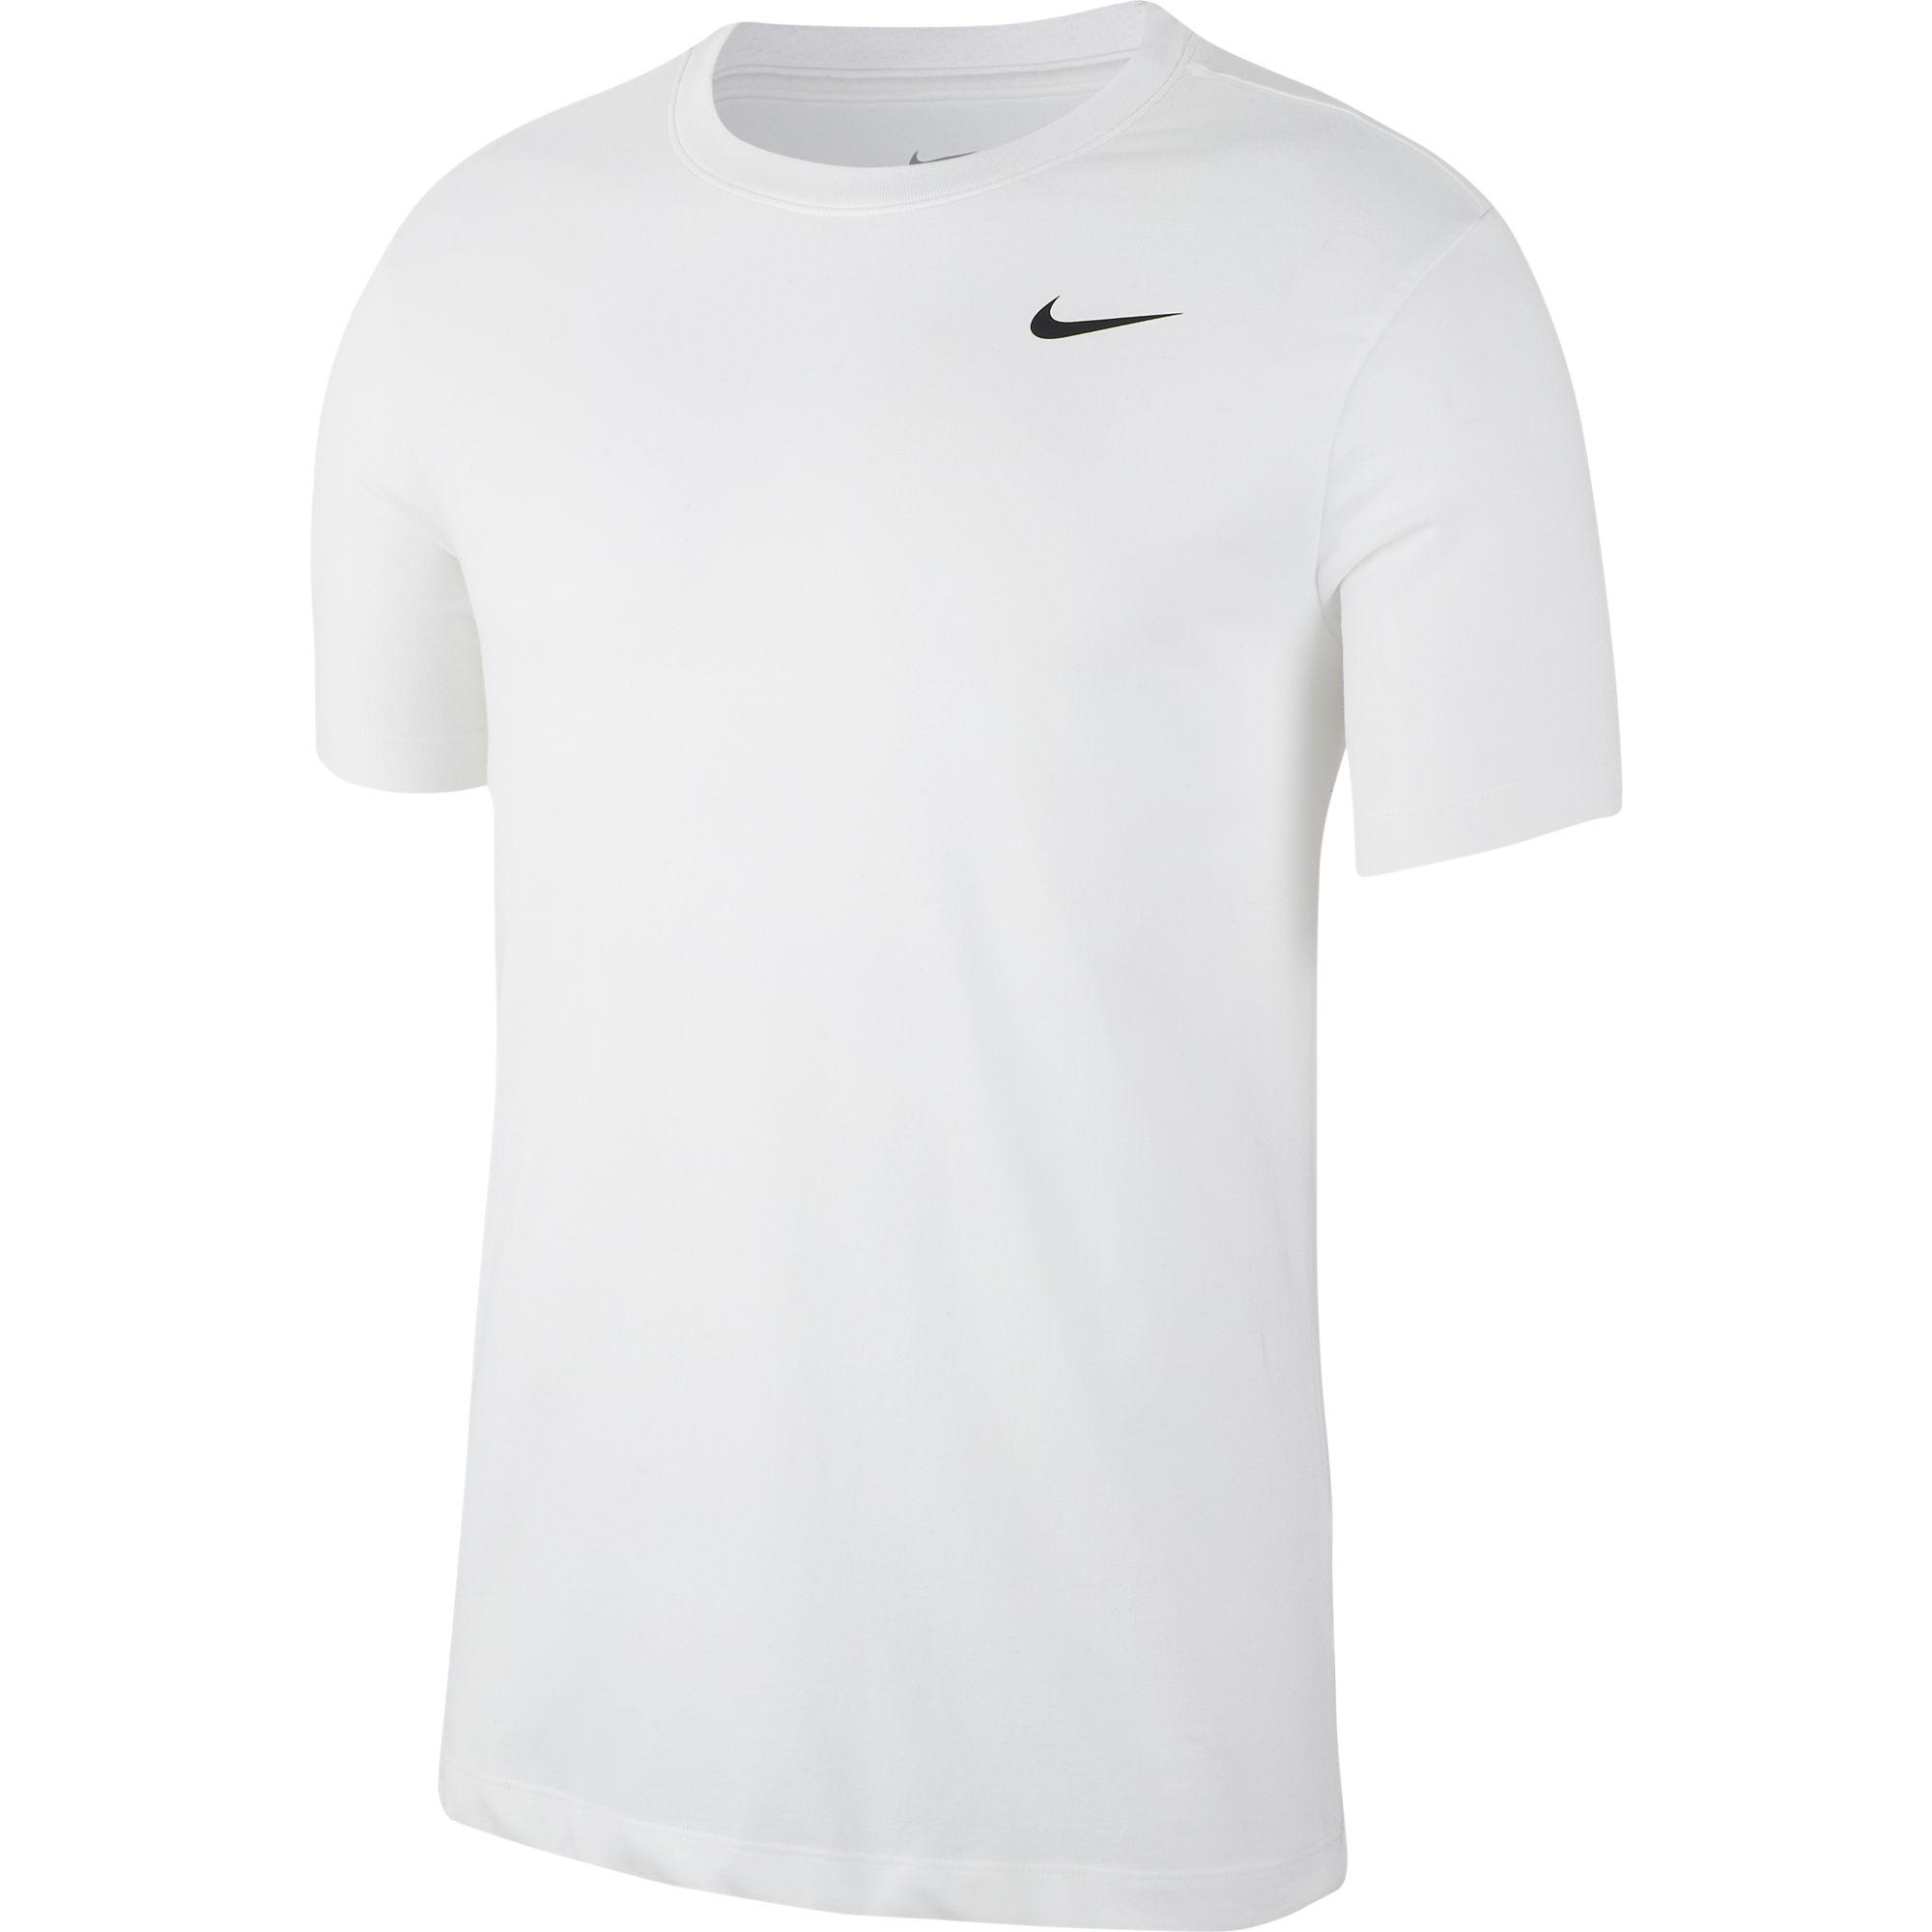 Nike Mens Dri-FIT Training Top - White - Tennisnuts.com